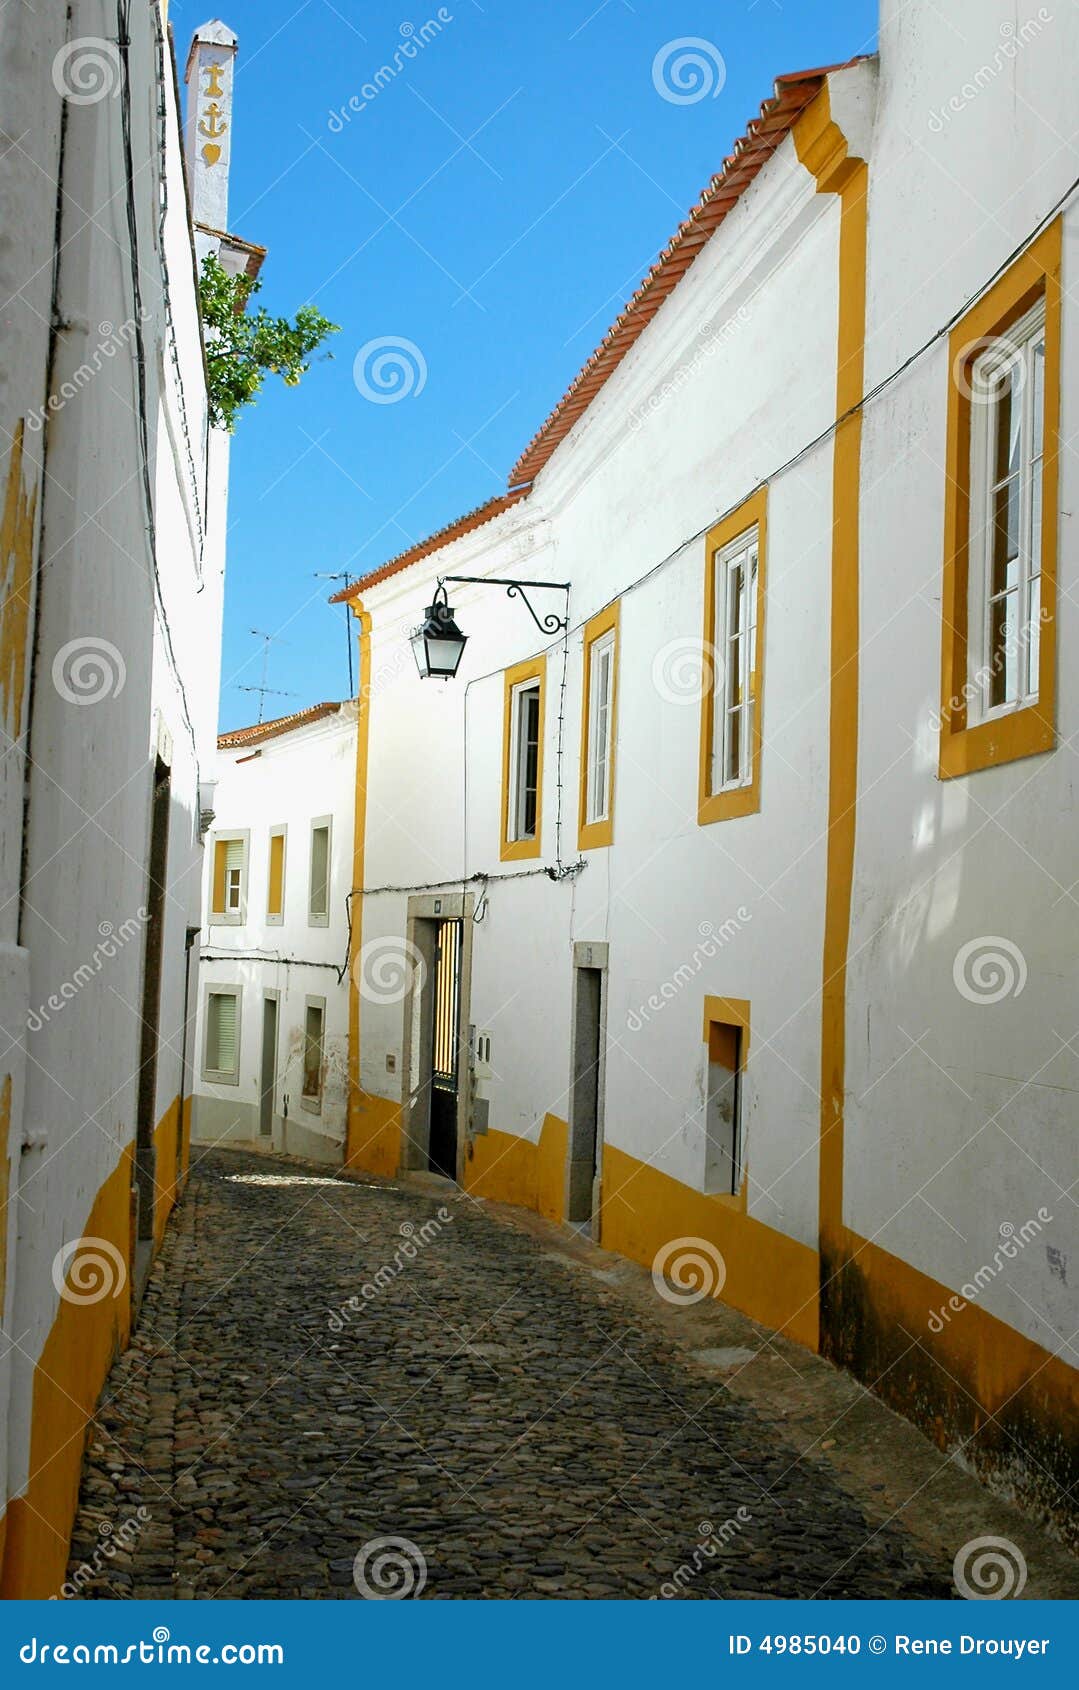 portugal, alentejo, evora; typical street